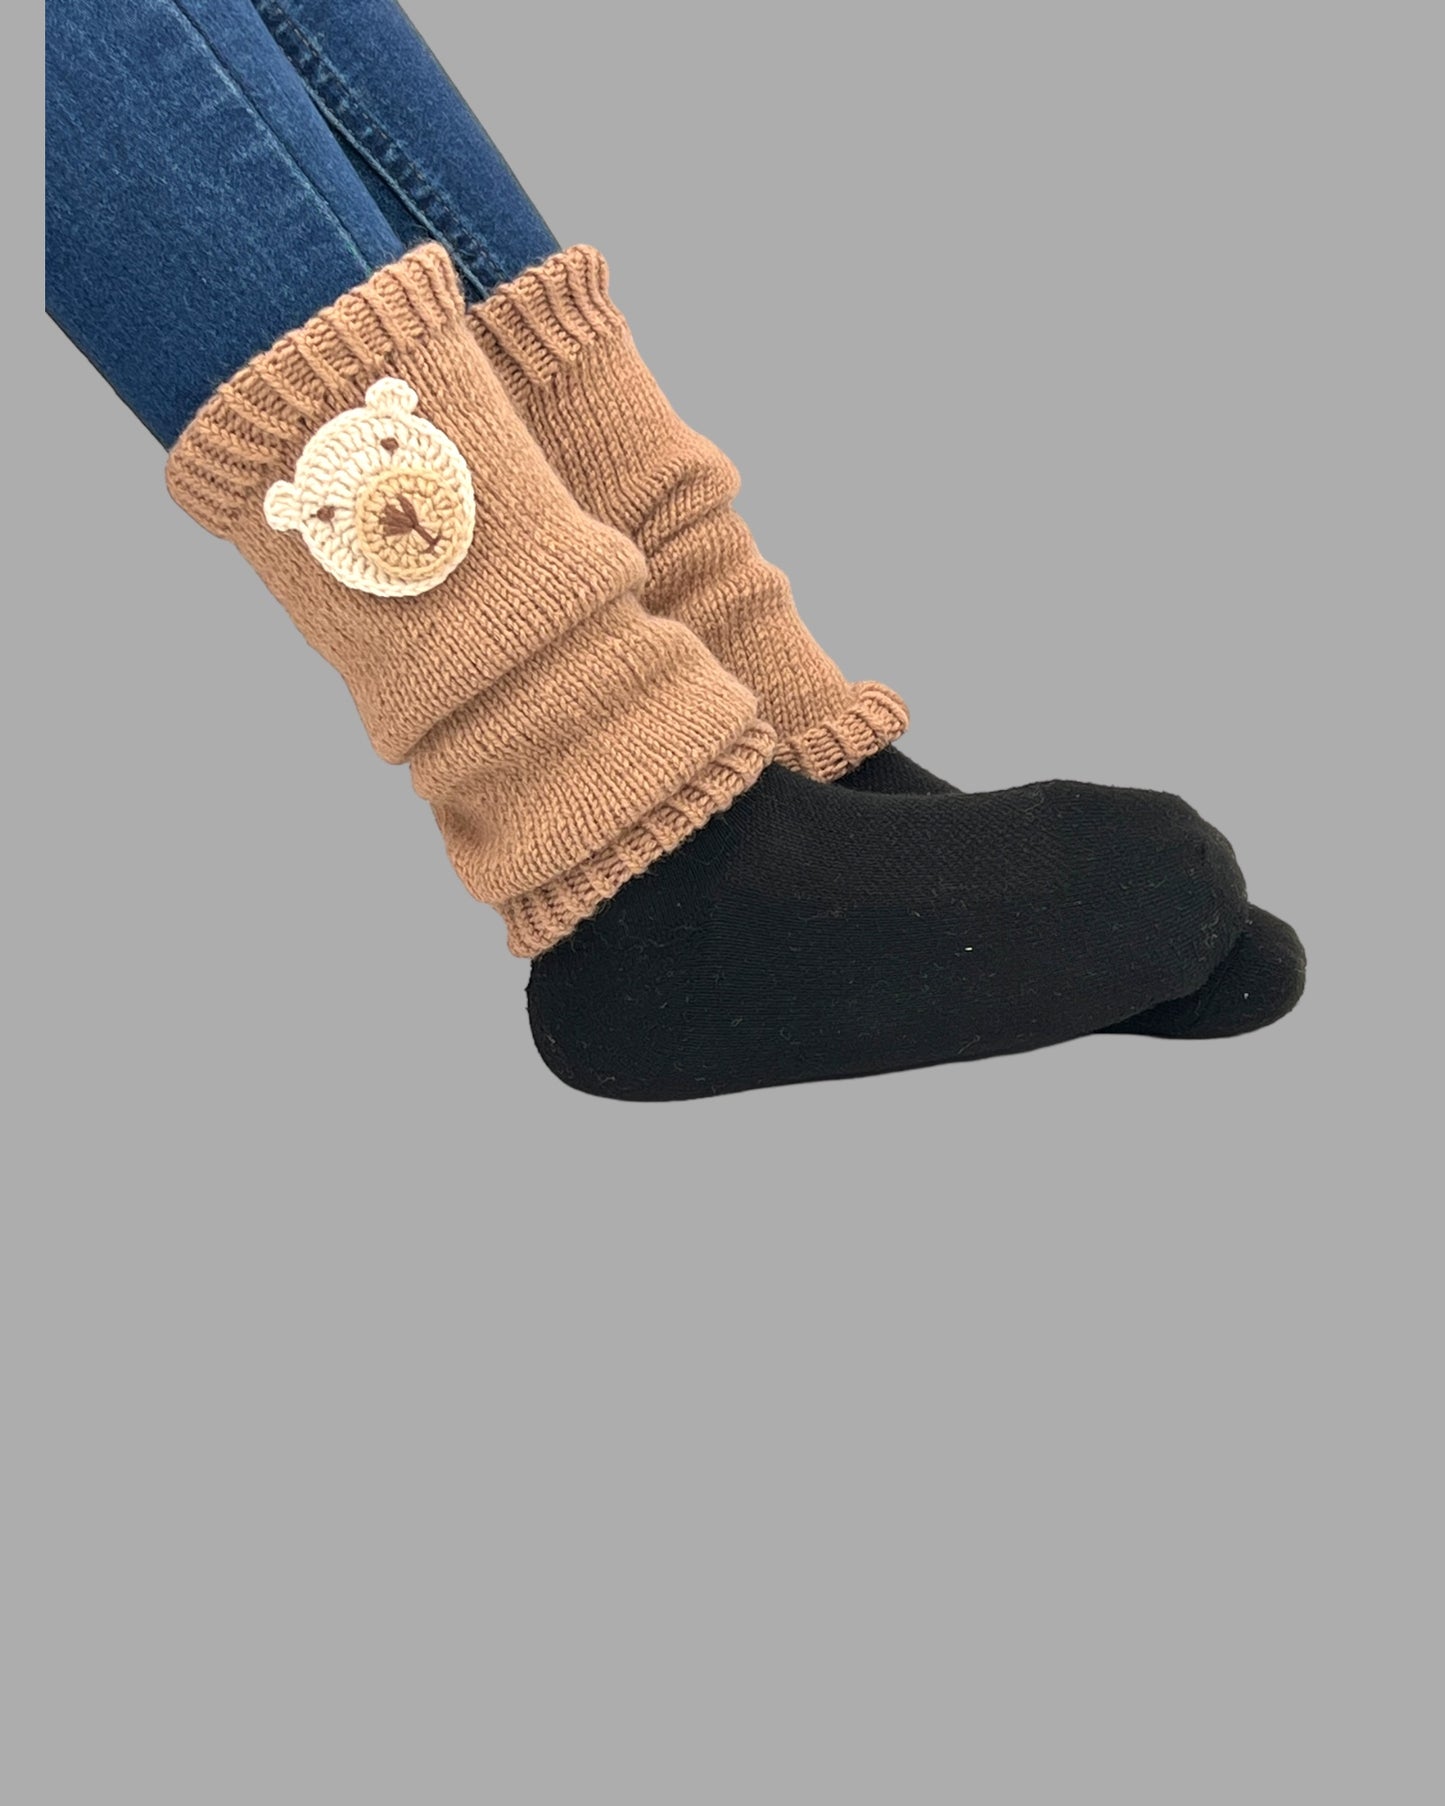 Crochet Kawaii Bear Hand Leg Warmers - Birthday Gift for Girls: Granddaughter, Daughter, Niece . Perfect for Stocking Stuffers, Baby Showers